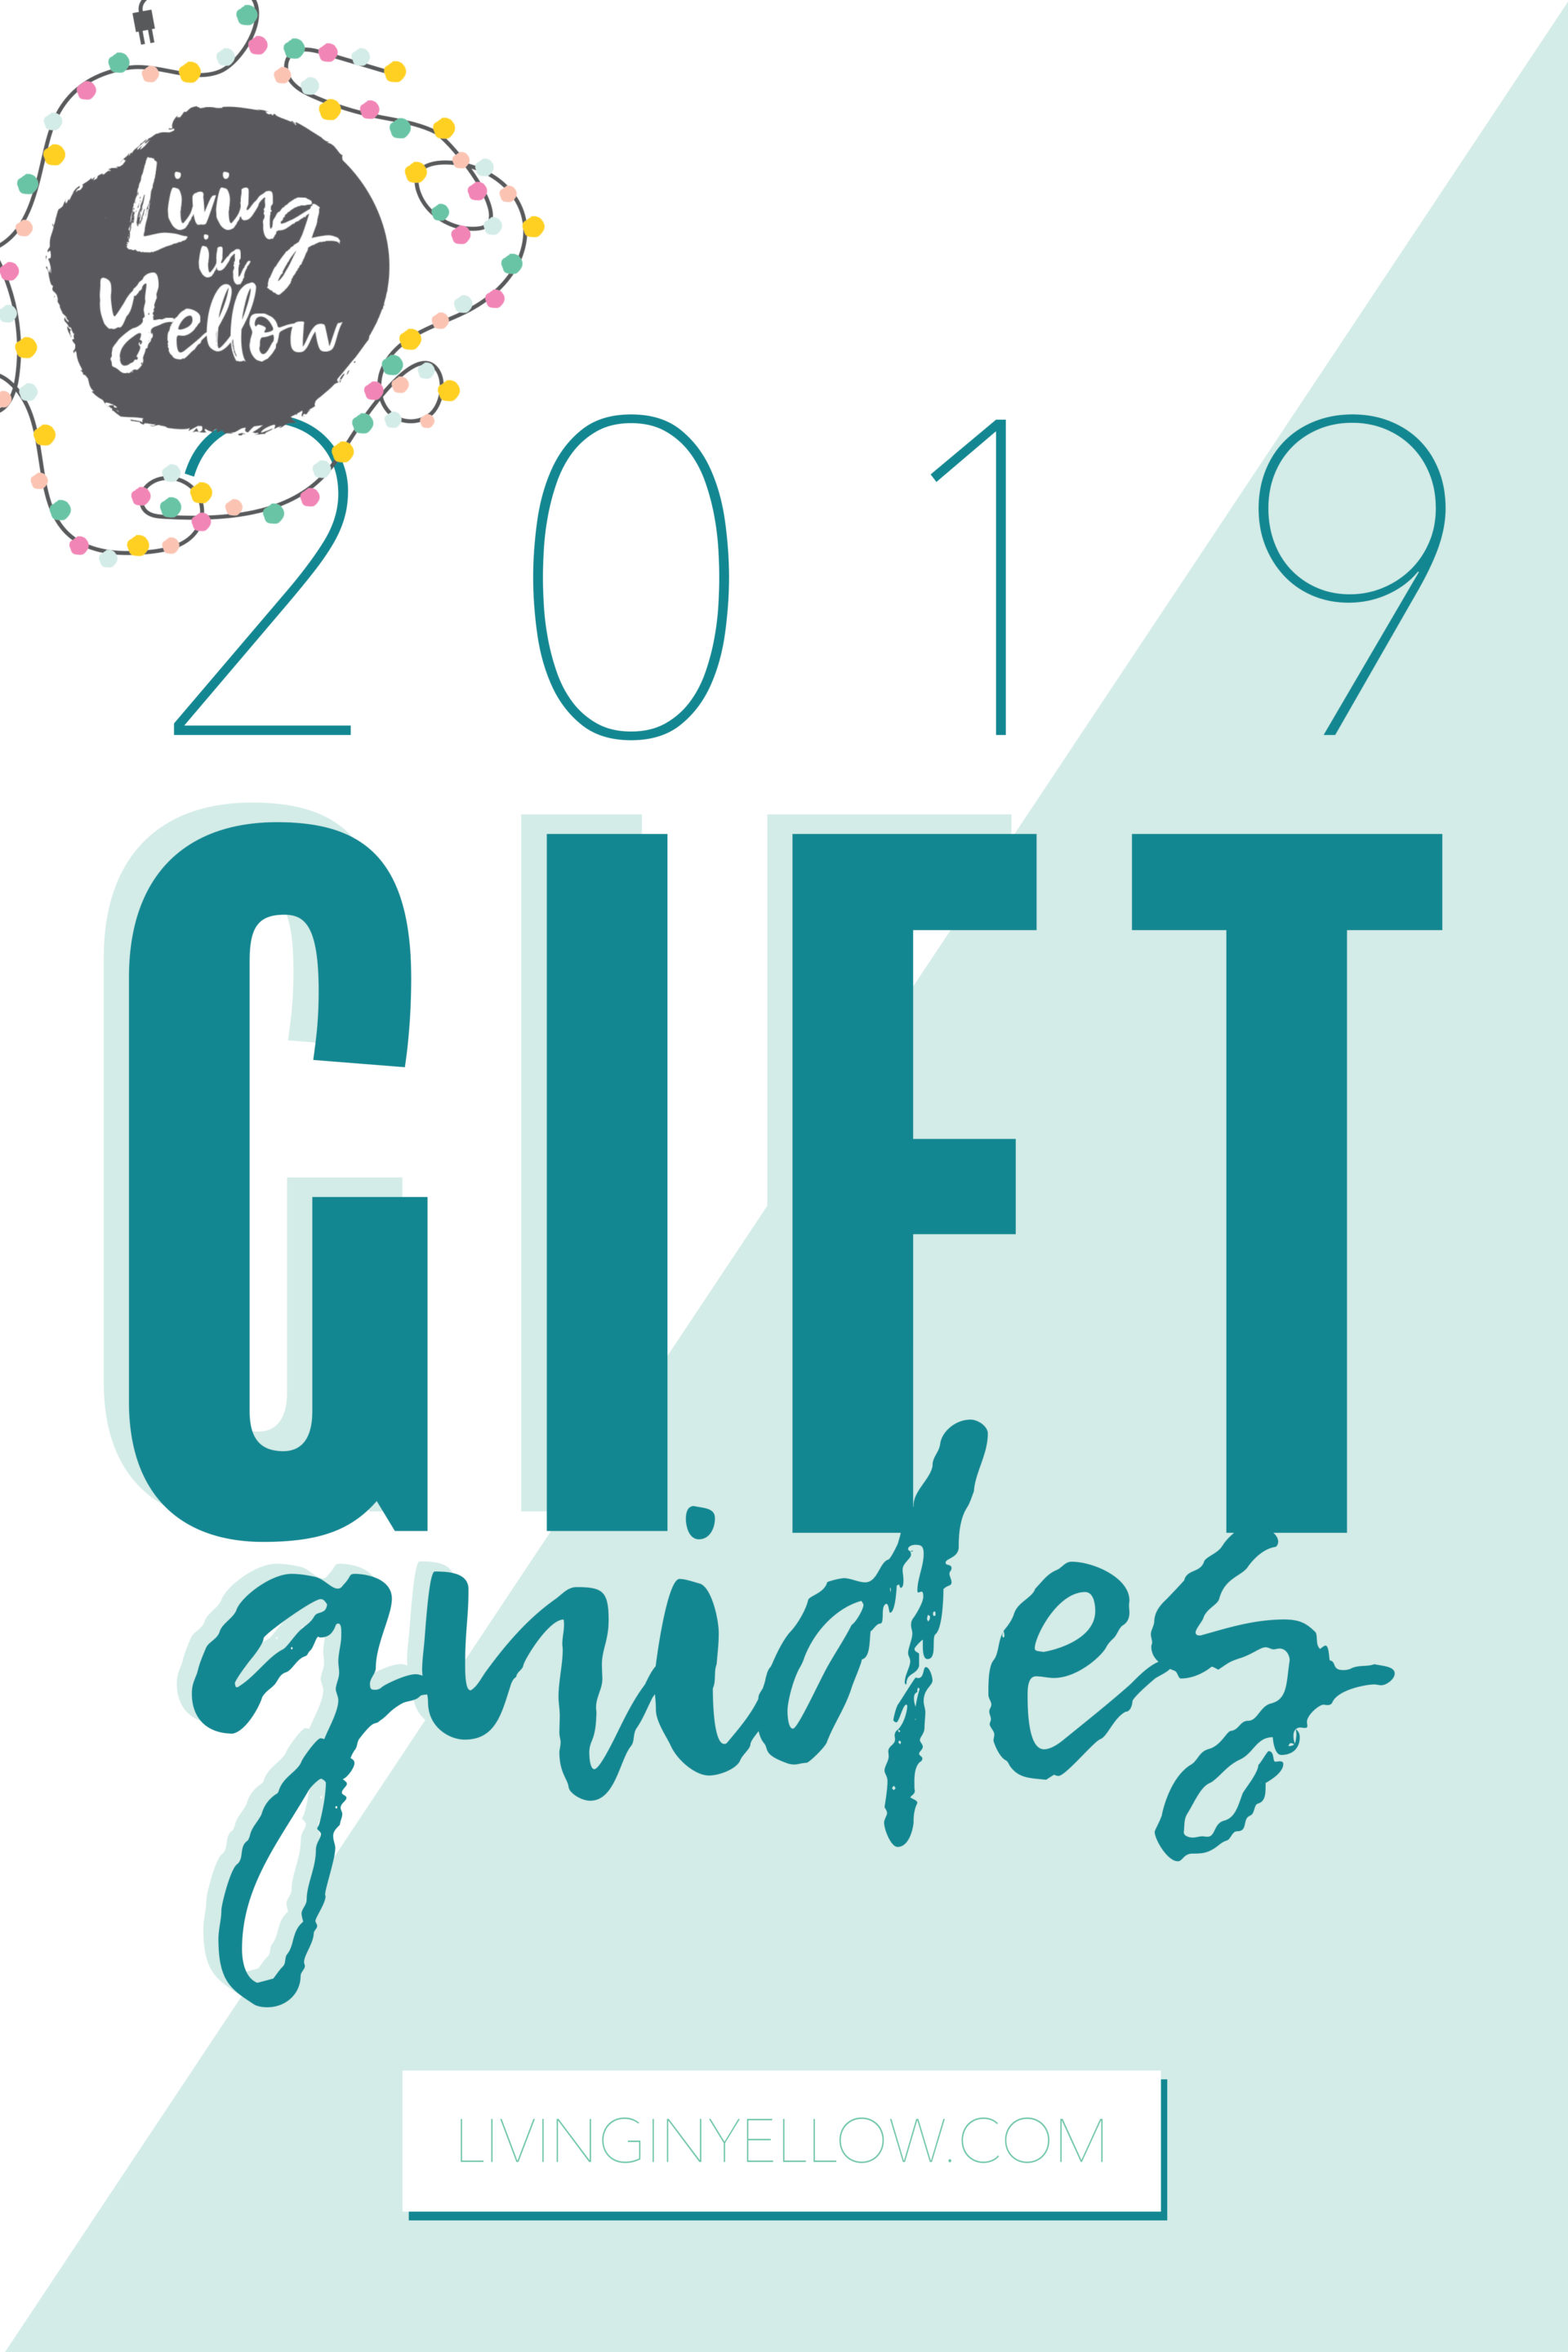 https://livinginyellow.com/wp-content/uploads/2019/10/Gift-Guide-Header.jpg